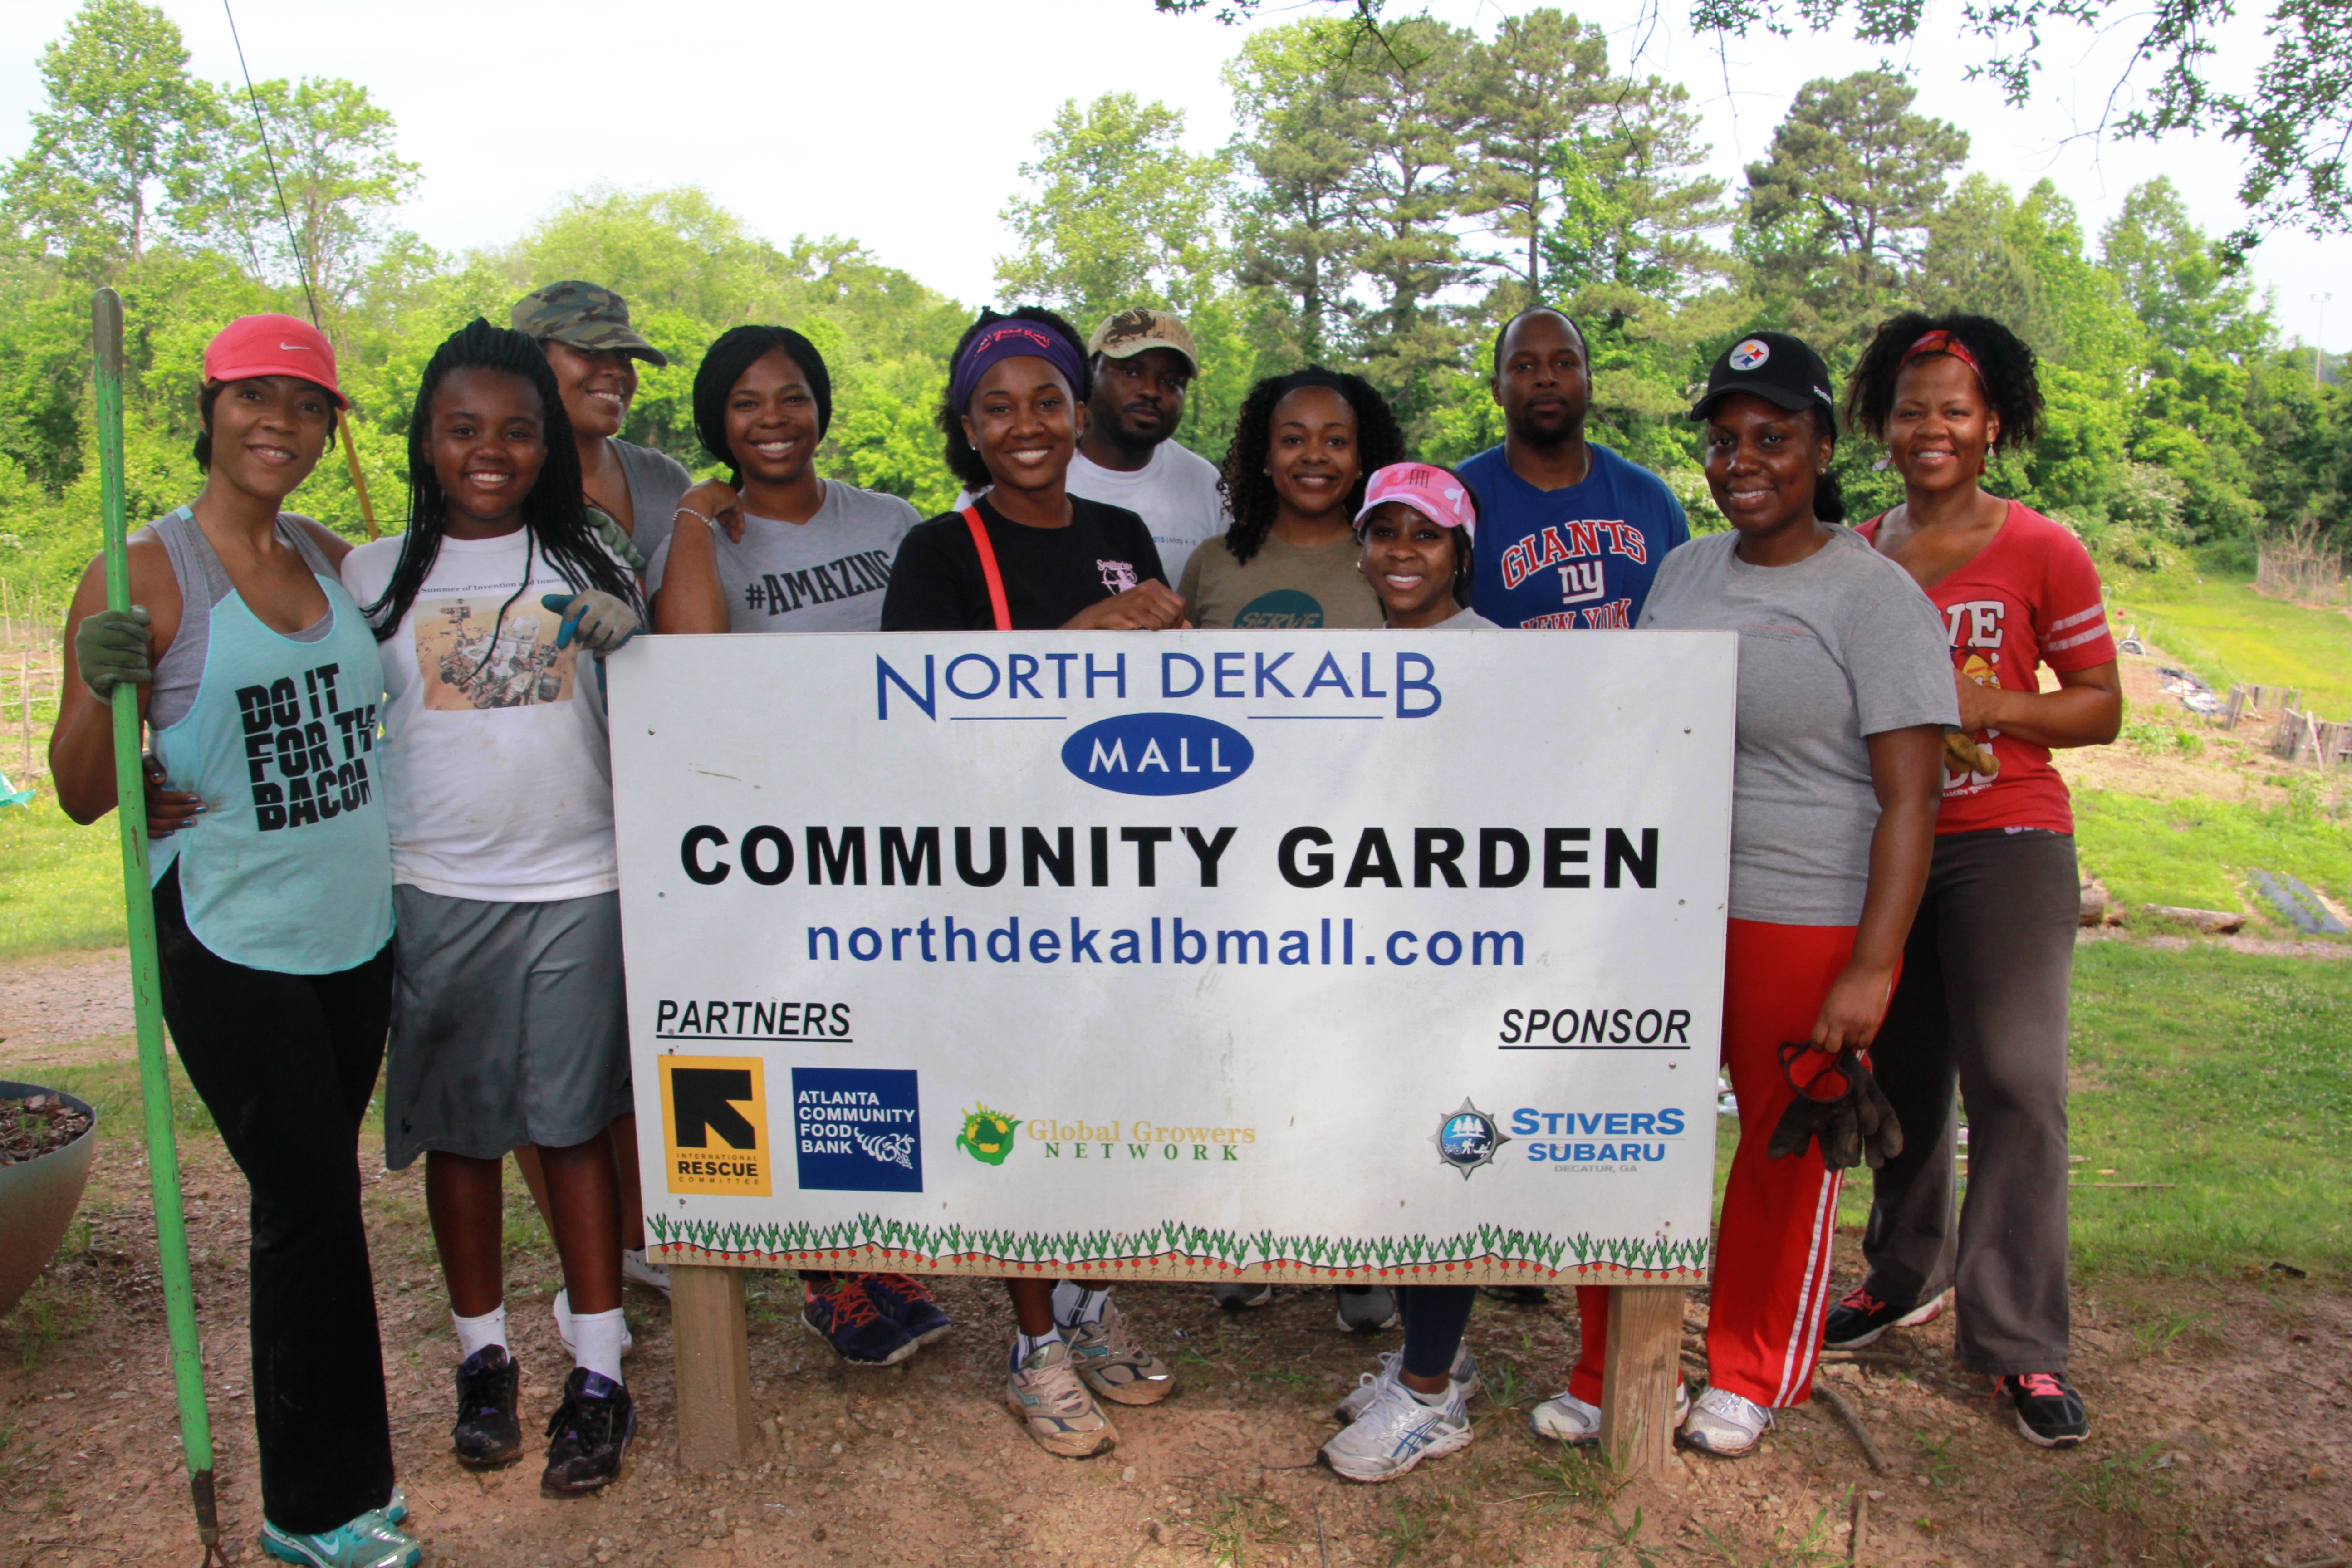 Atlanta S Black Mba Teamed With Food Bank To Improve Community